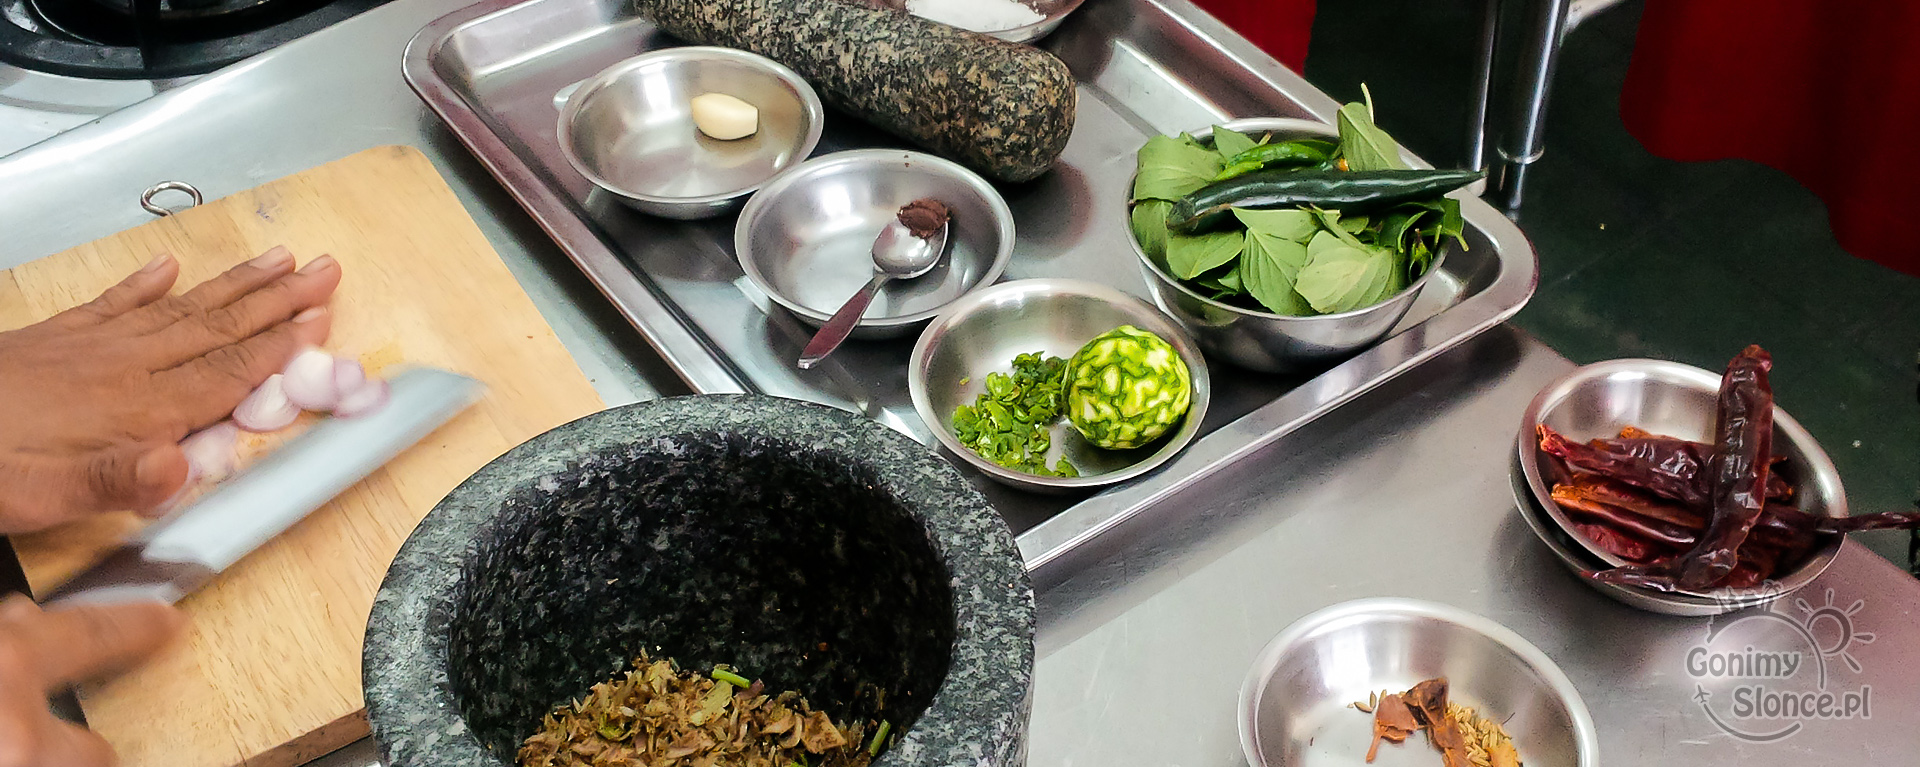 Kurs gotowania w Bangkoku - kuchnia tajska  